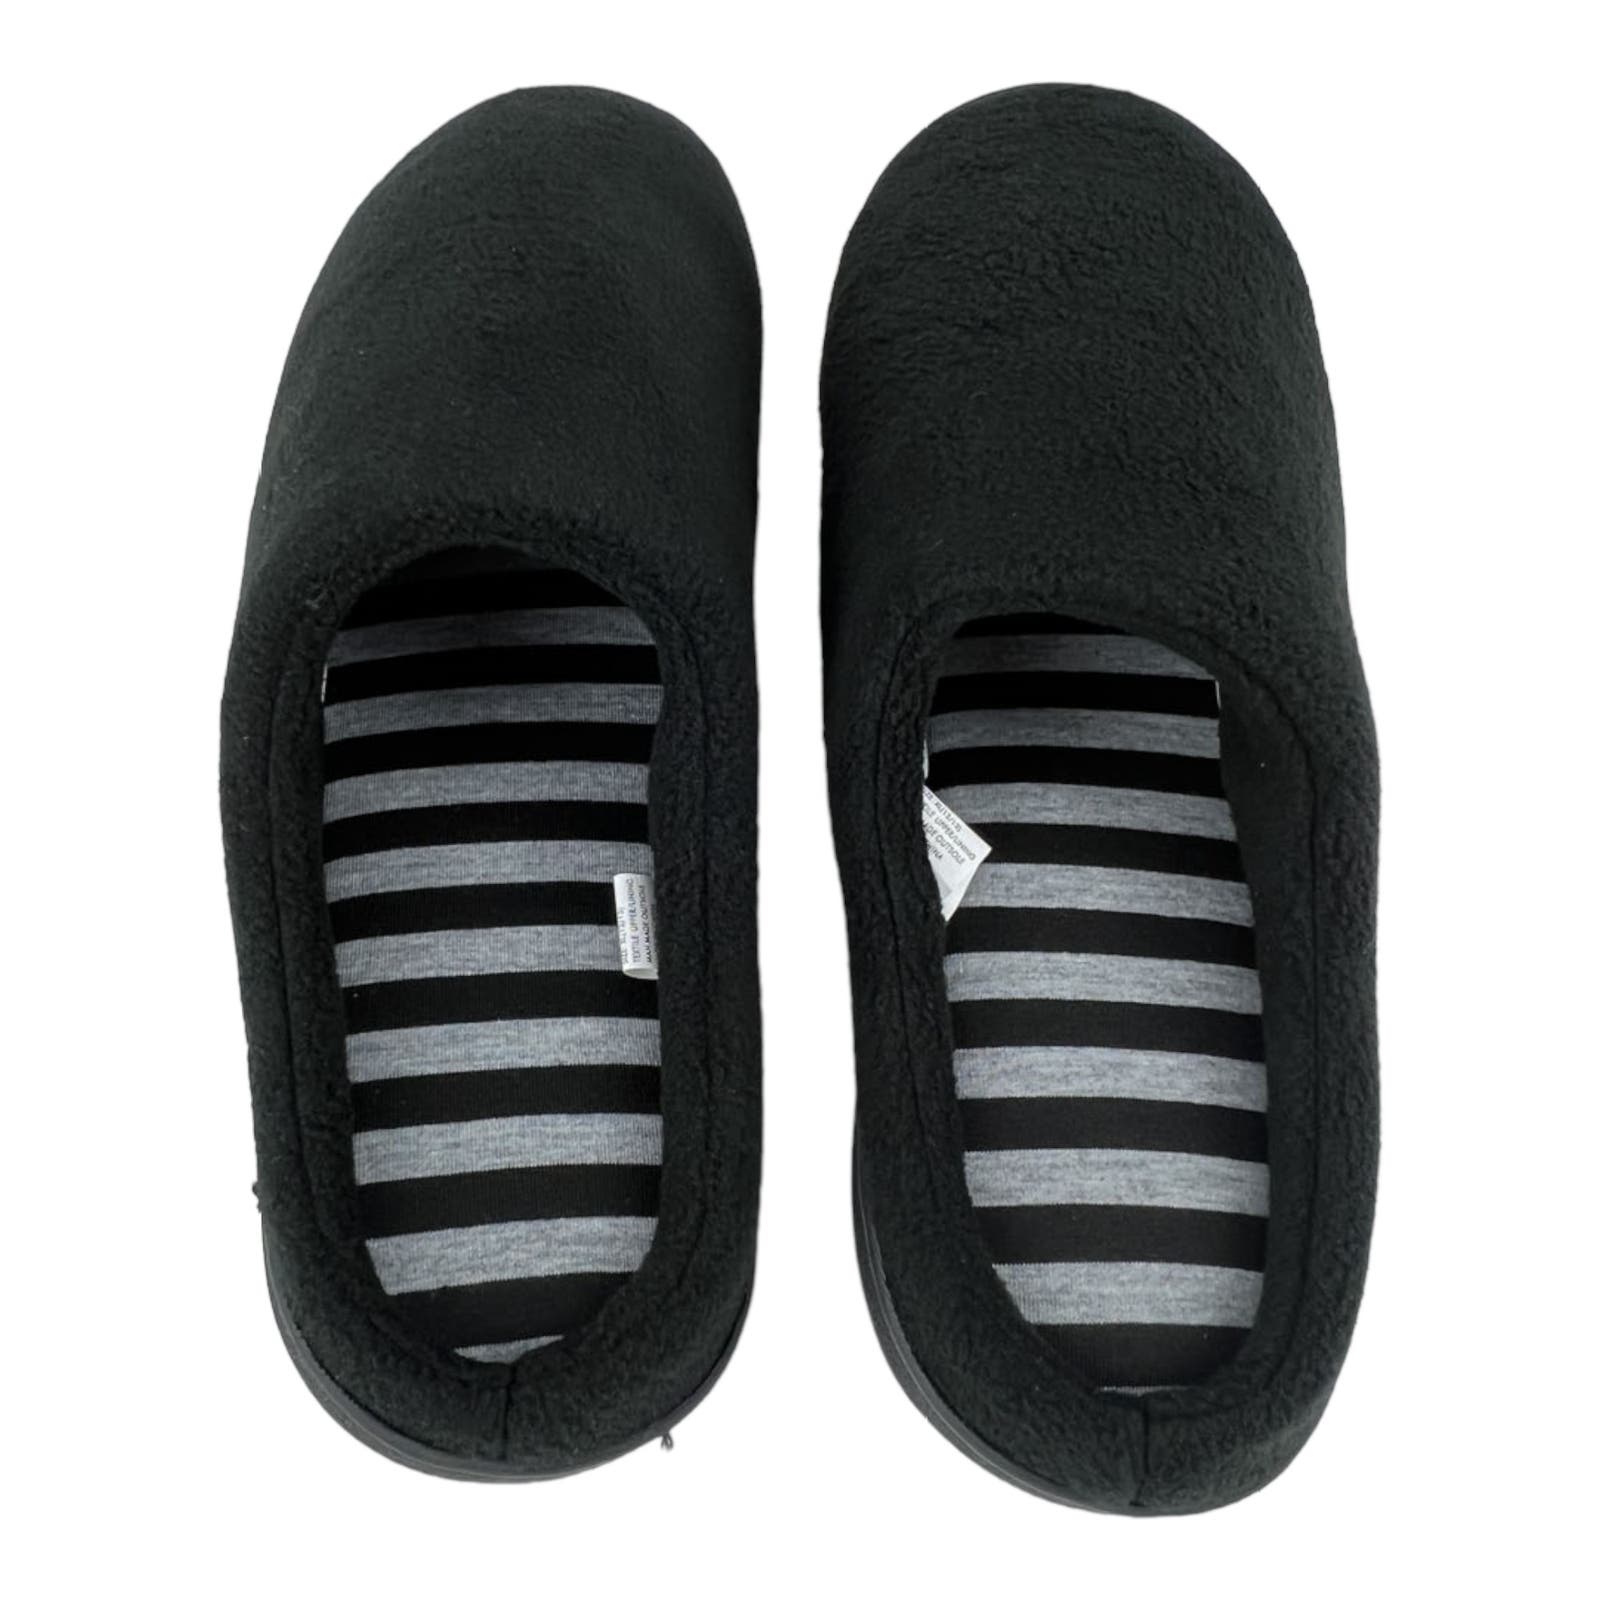 Gold Toe Men US XL Fleece Scuff Warm Plush Black Slippers Shoes